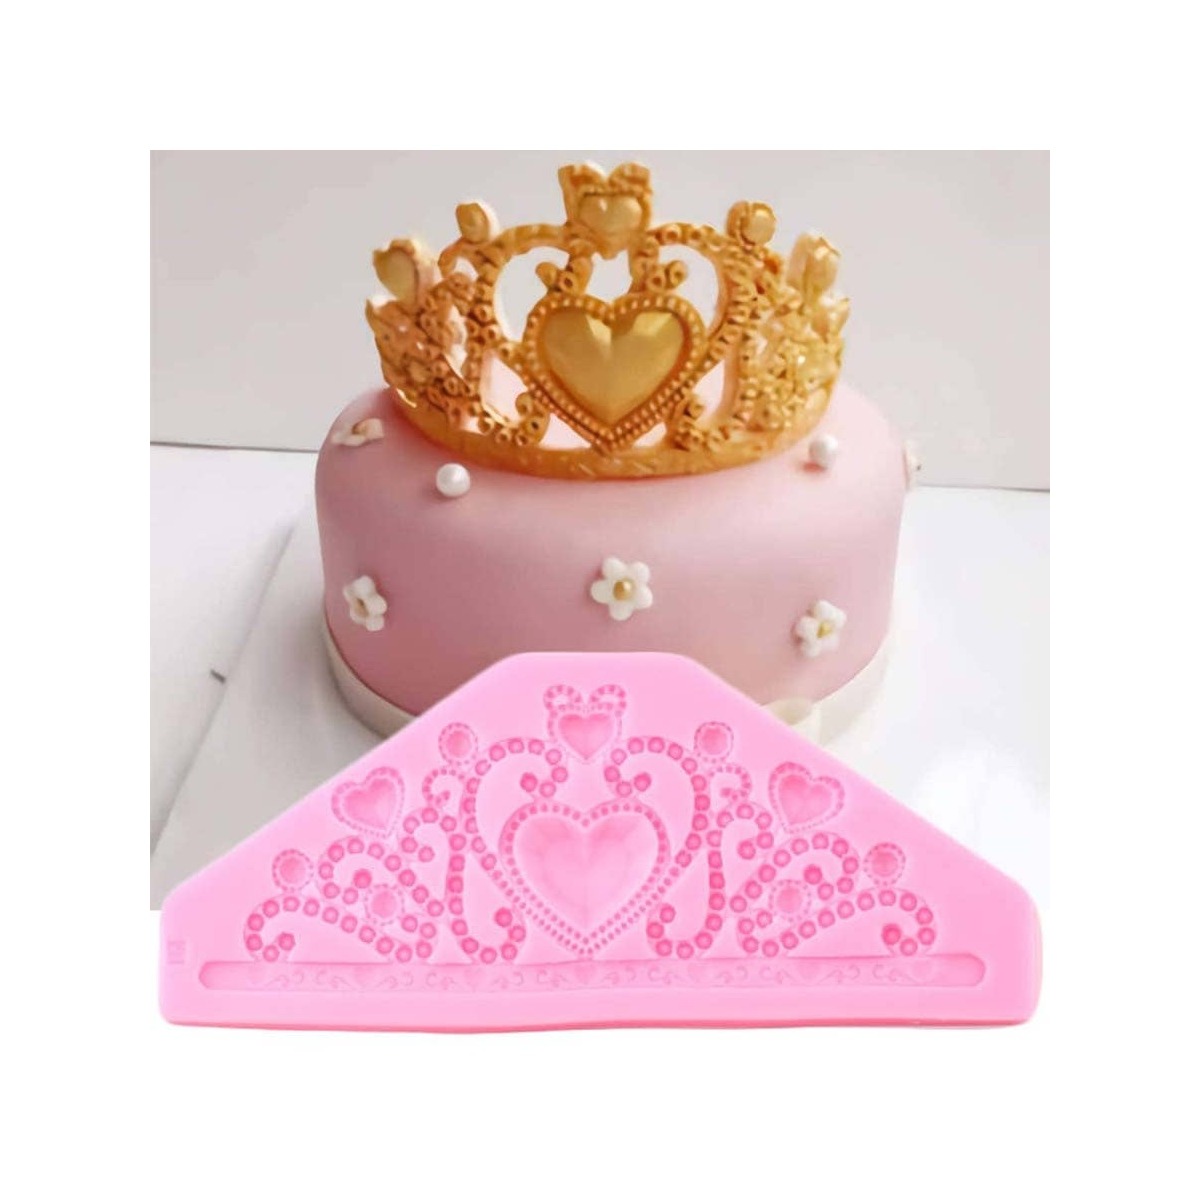  Heart Birthday Cakes Silicone Mold Fondant Cake Mold